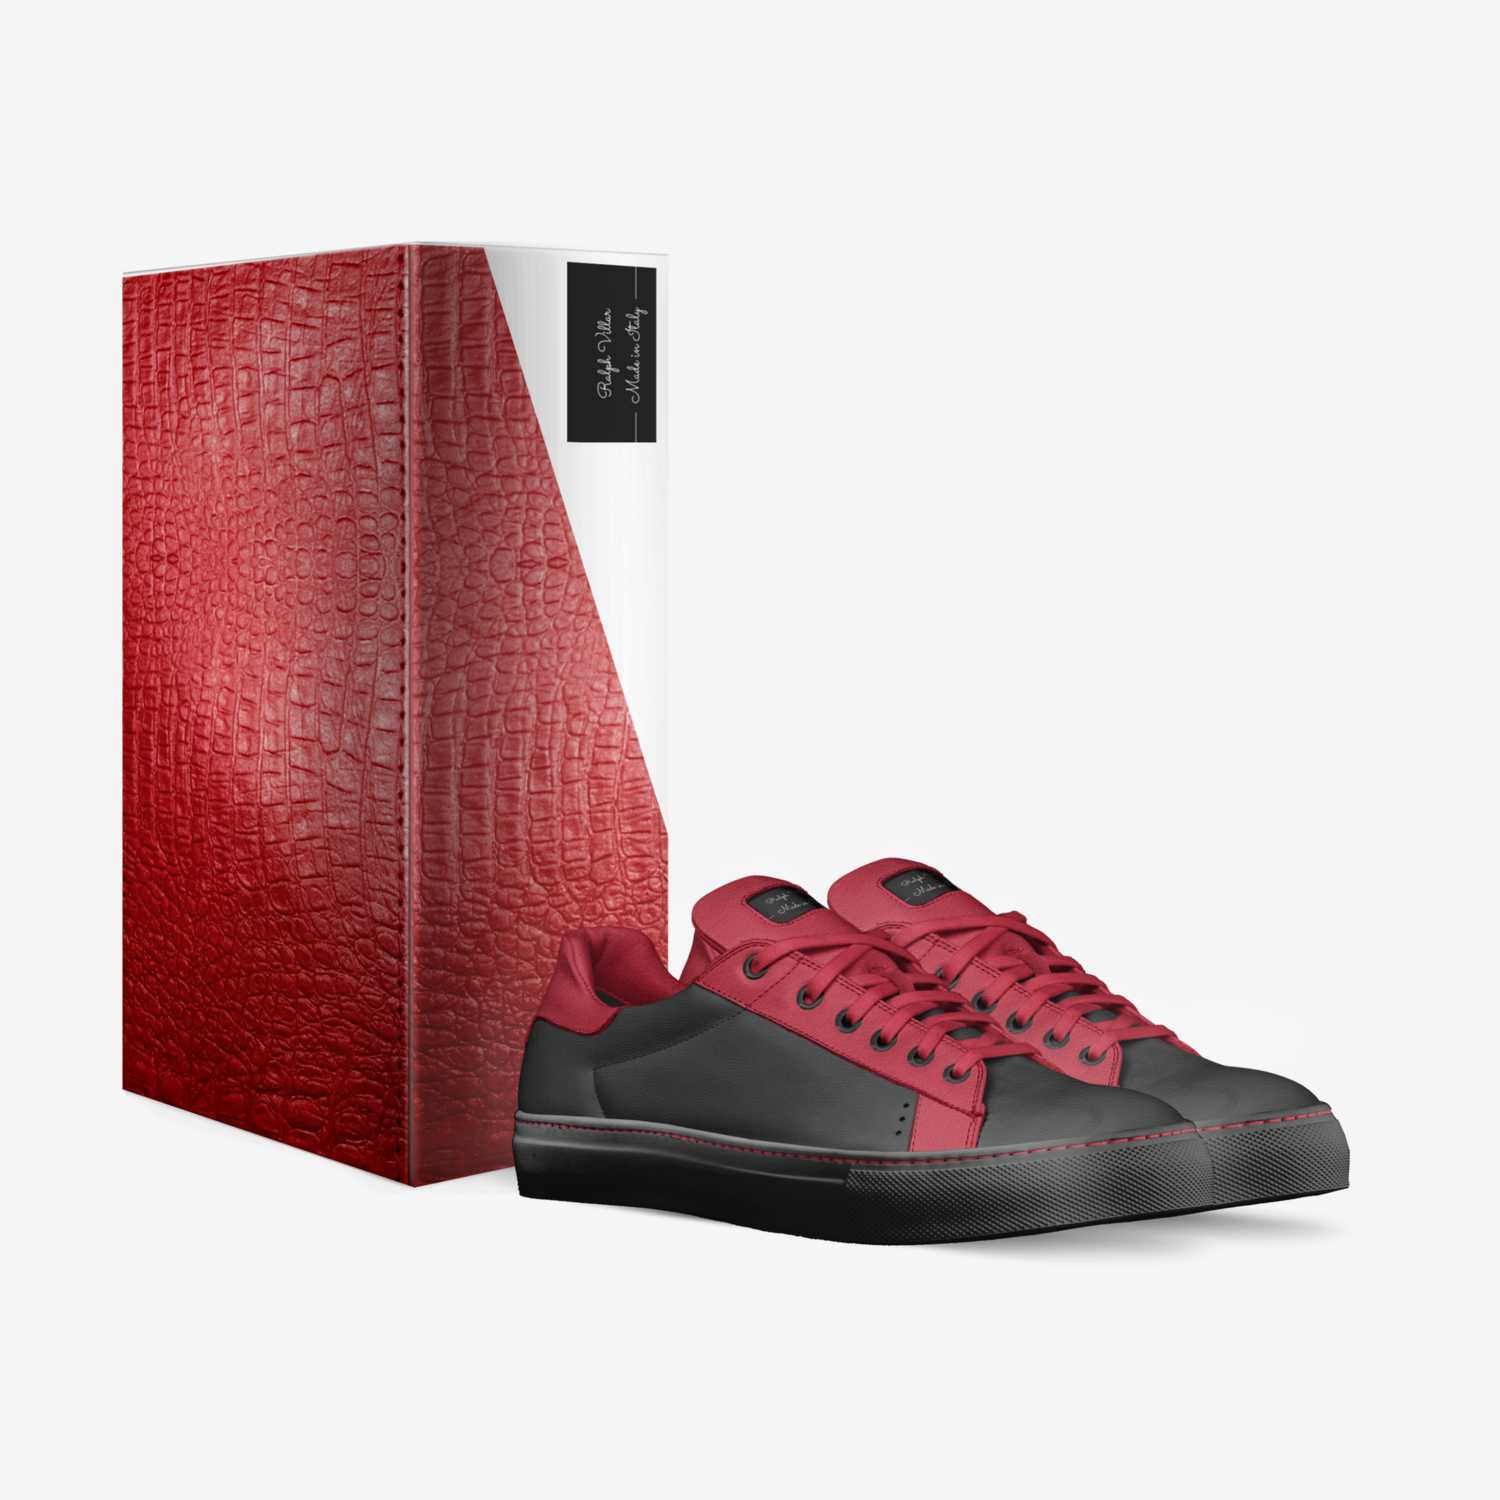 Ralph Villar custom made in Italy shoes by Rafael Villar | Box view